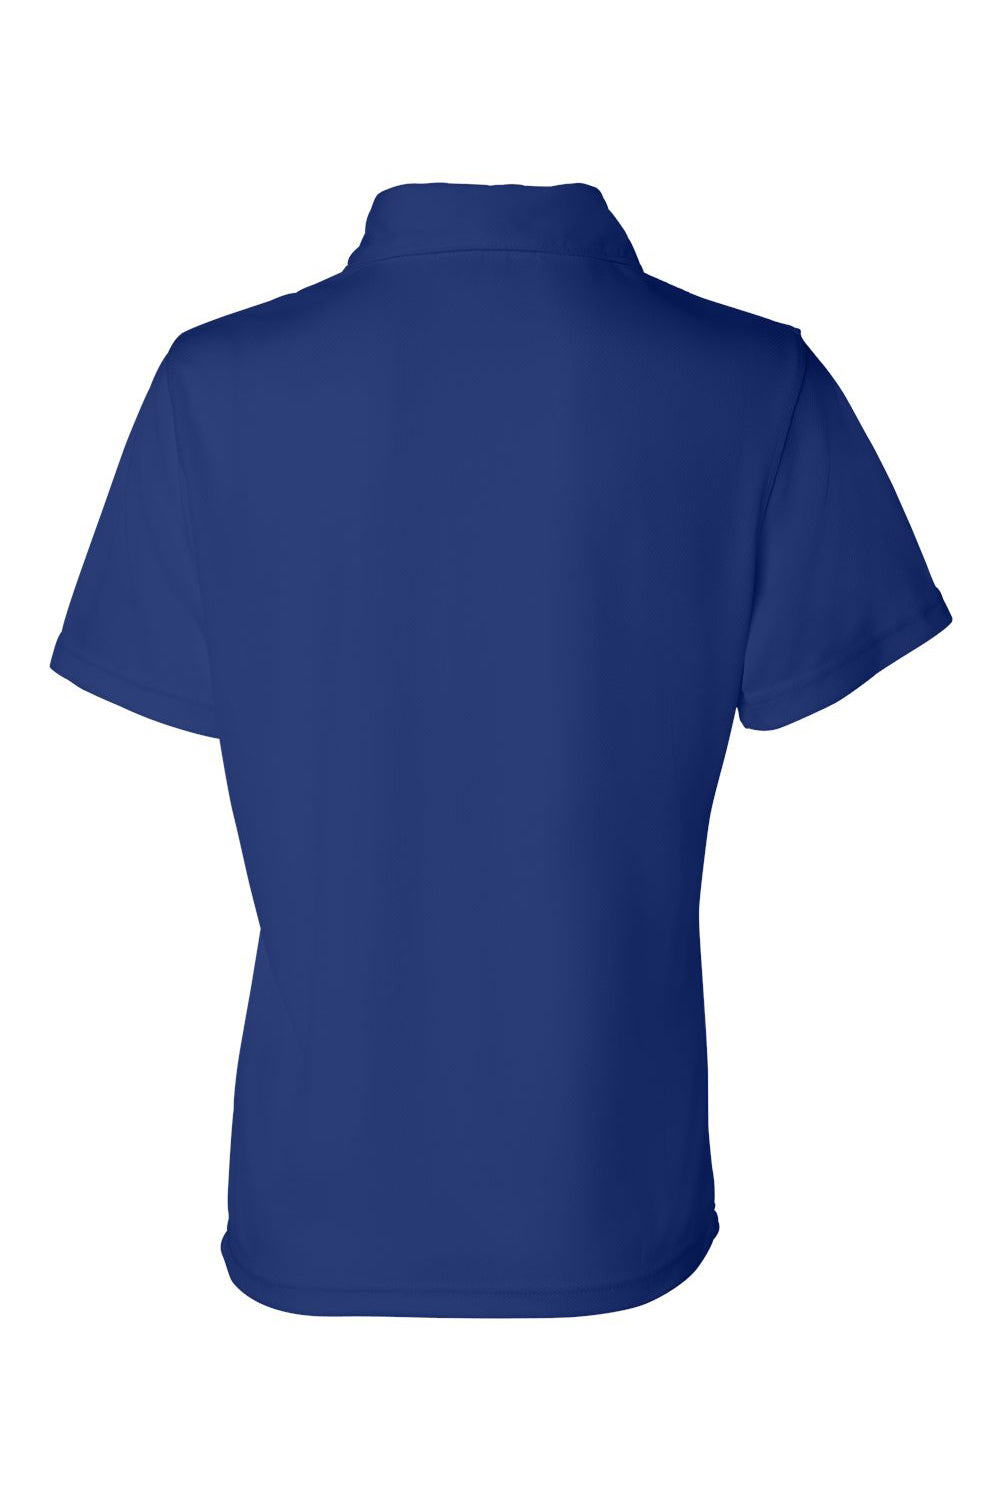 Sierra Pacific 5469 Womens Moisture Wicking Mesh Short Sleeve Polo Shirt Royal Blue Flat Back